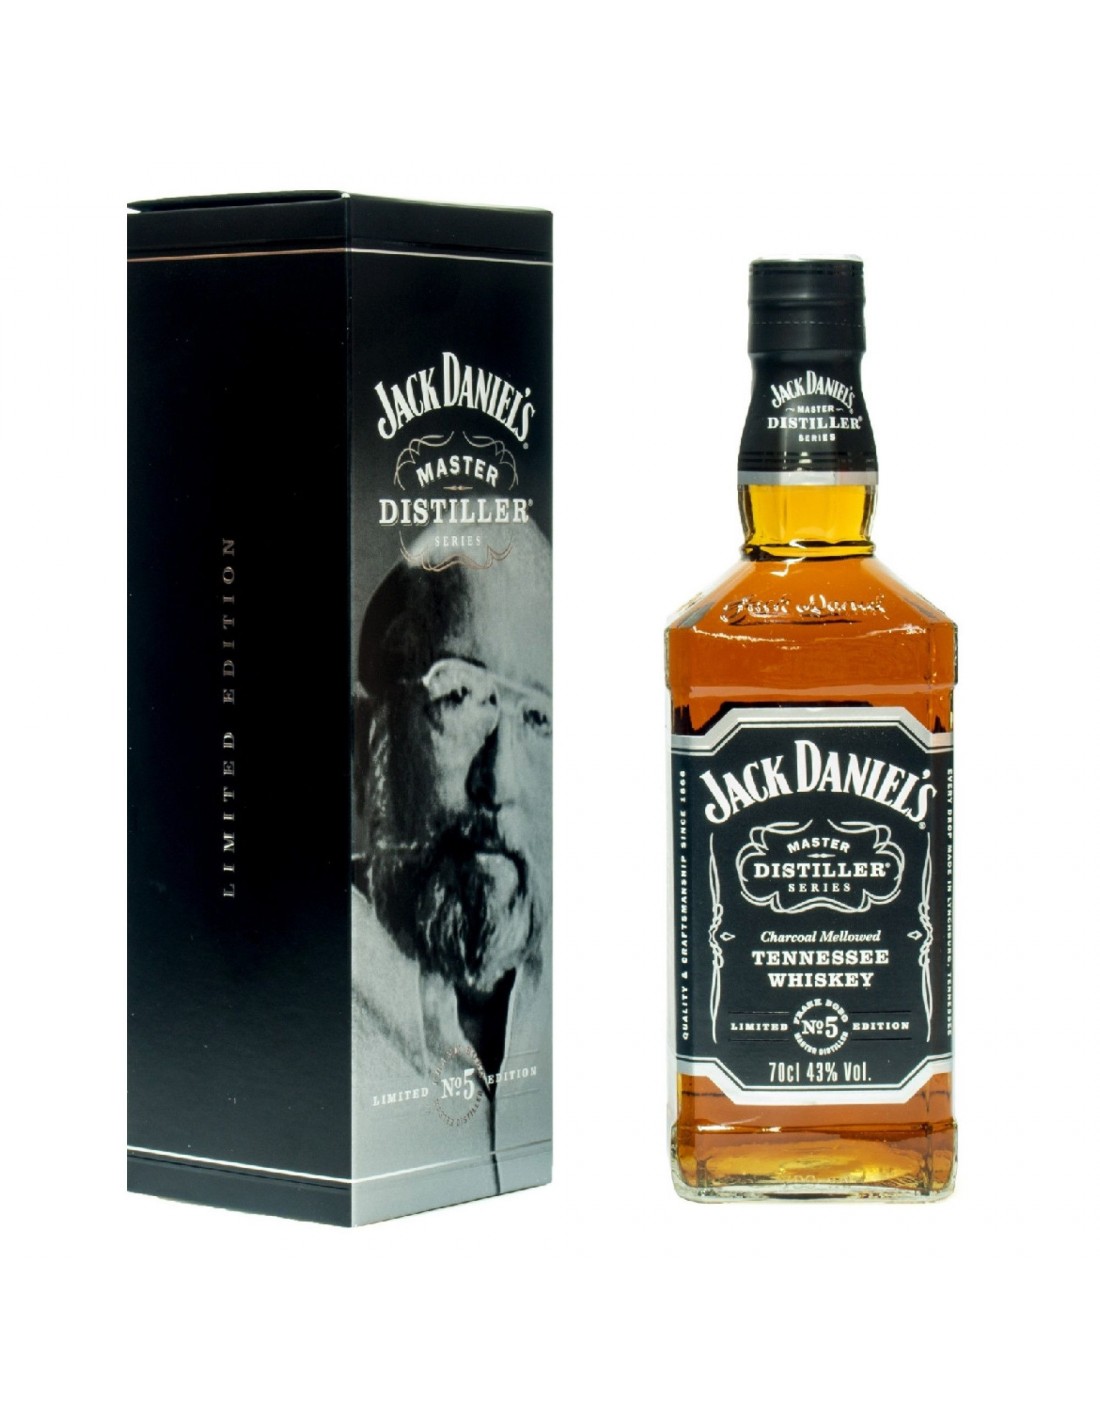 Whisky Jack Daniel’s Master Distiller No. 5 0.7L, 43% alc., SUA alcooldiscount.ro